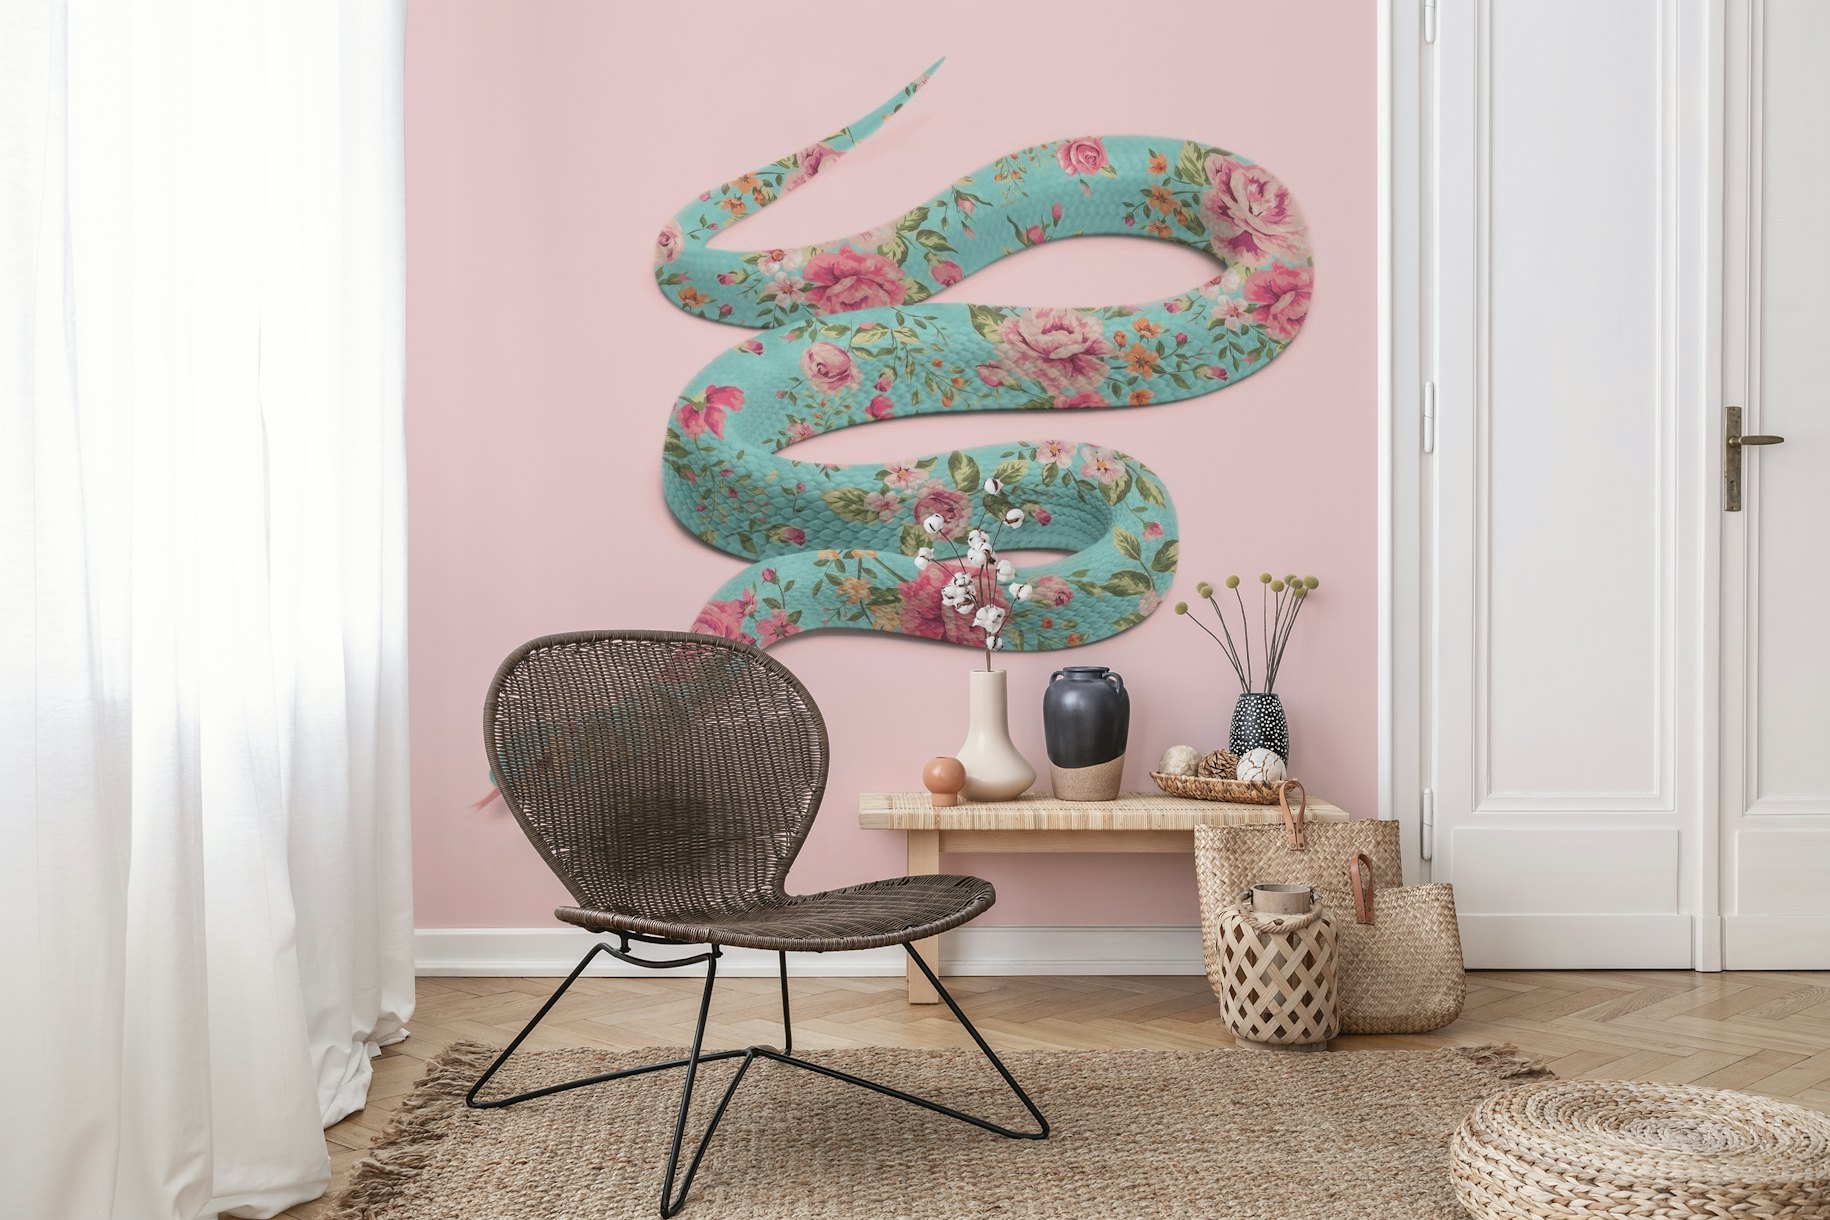 Floral Snake Wallpaper - A beautiful and elegant snake design on a soft pink background